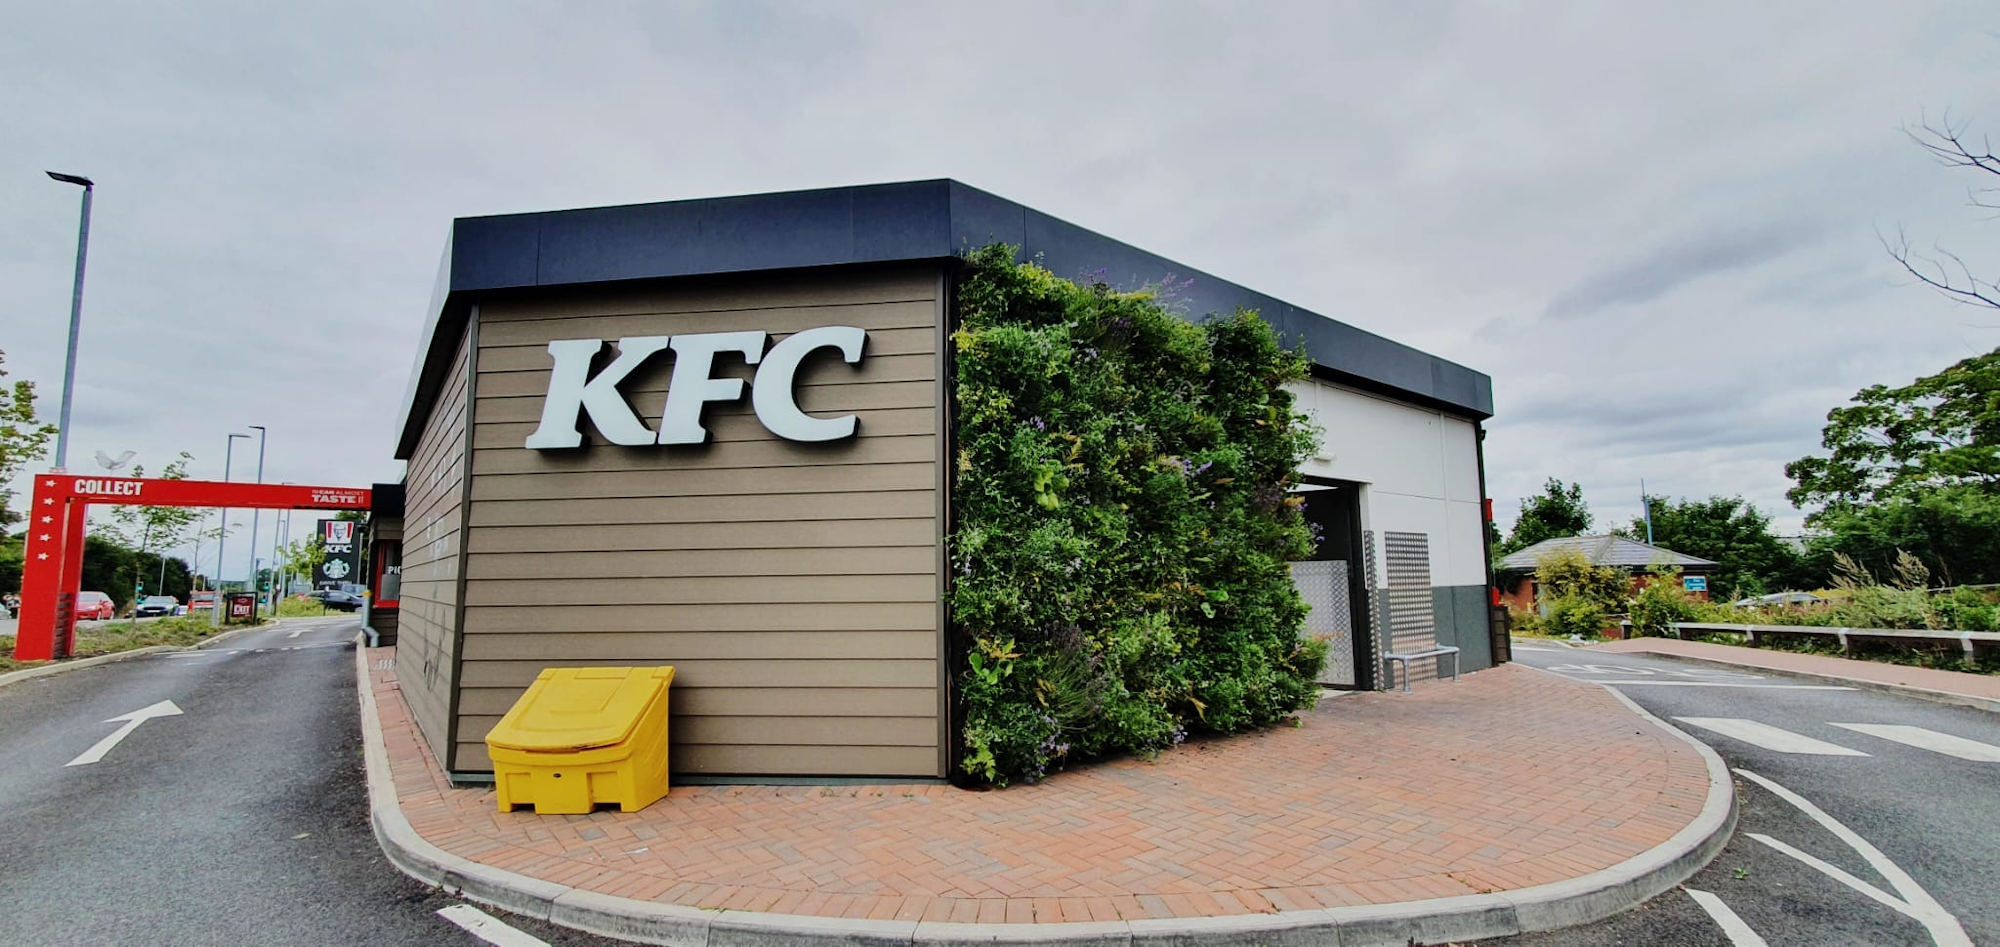 Lush living wall next to KFC sign